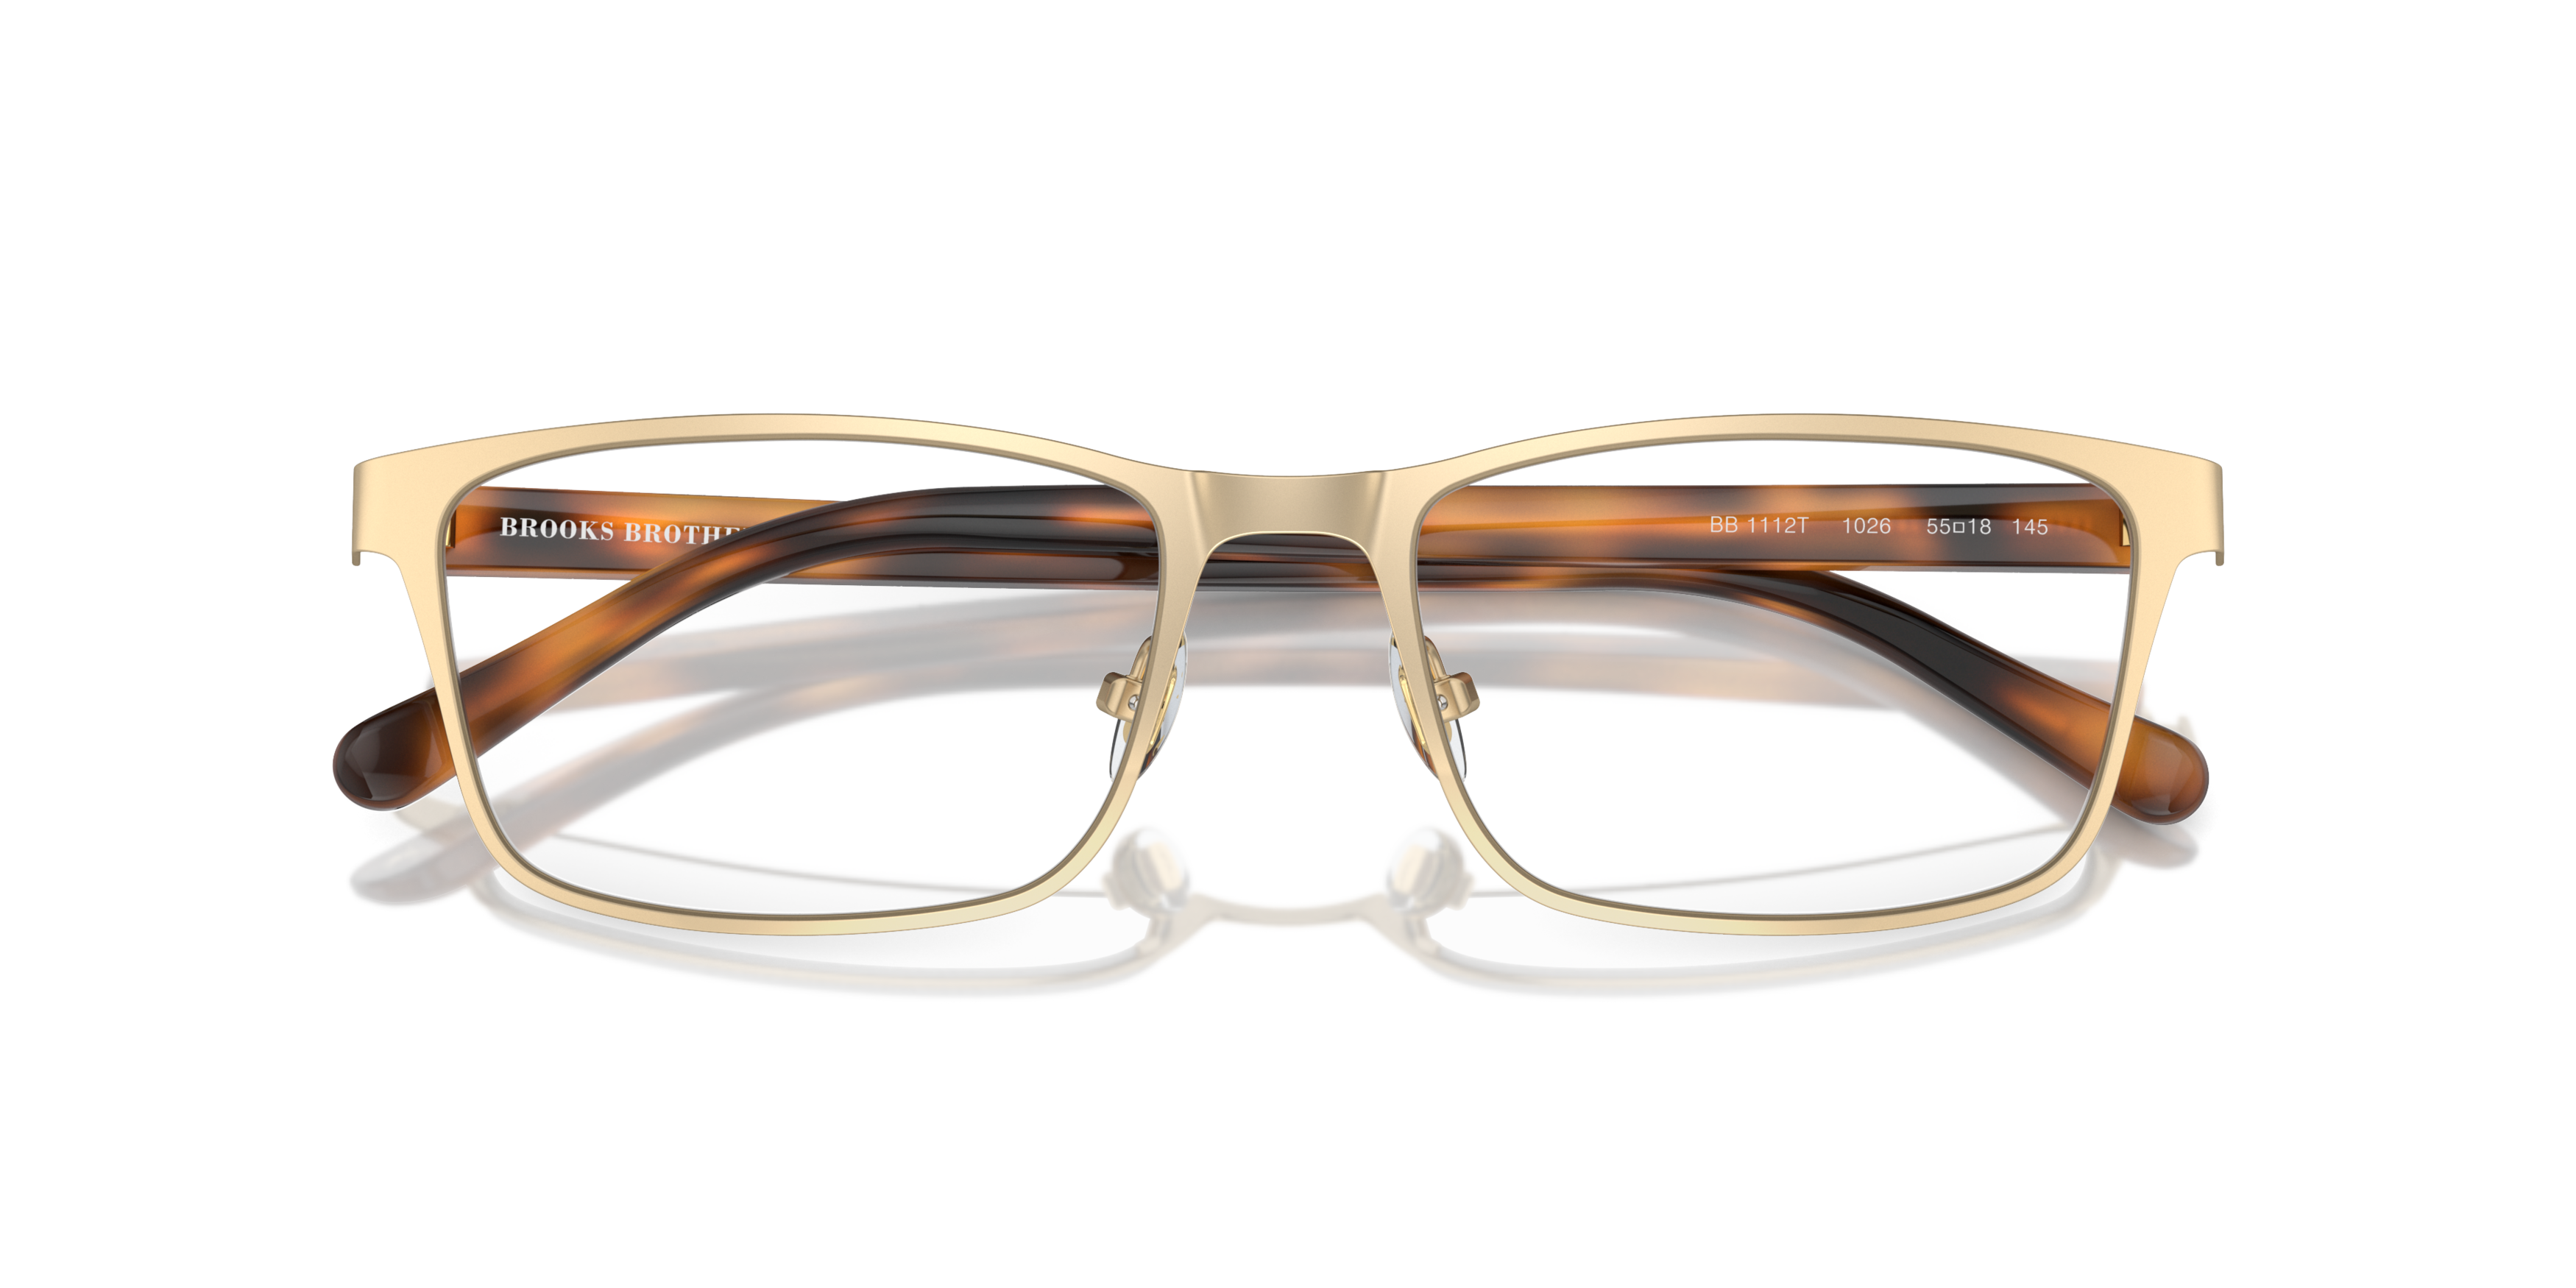 Folded Brooks Brothers BB 1112T Glasses Transparent / Gold